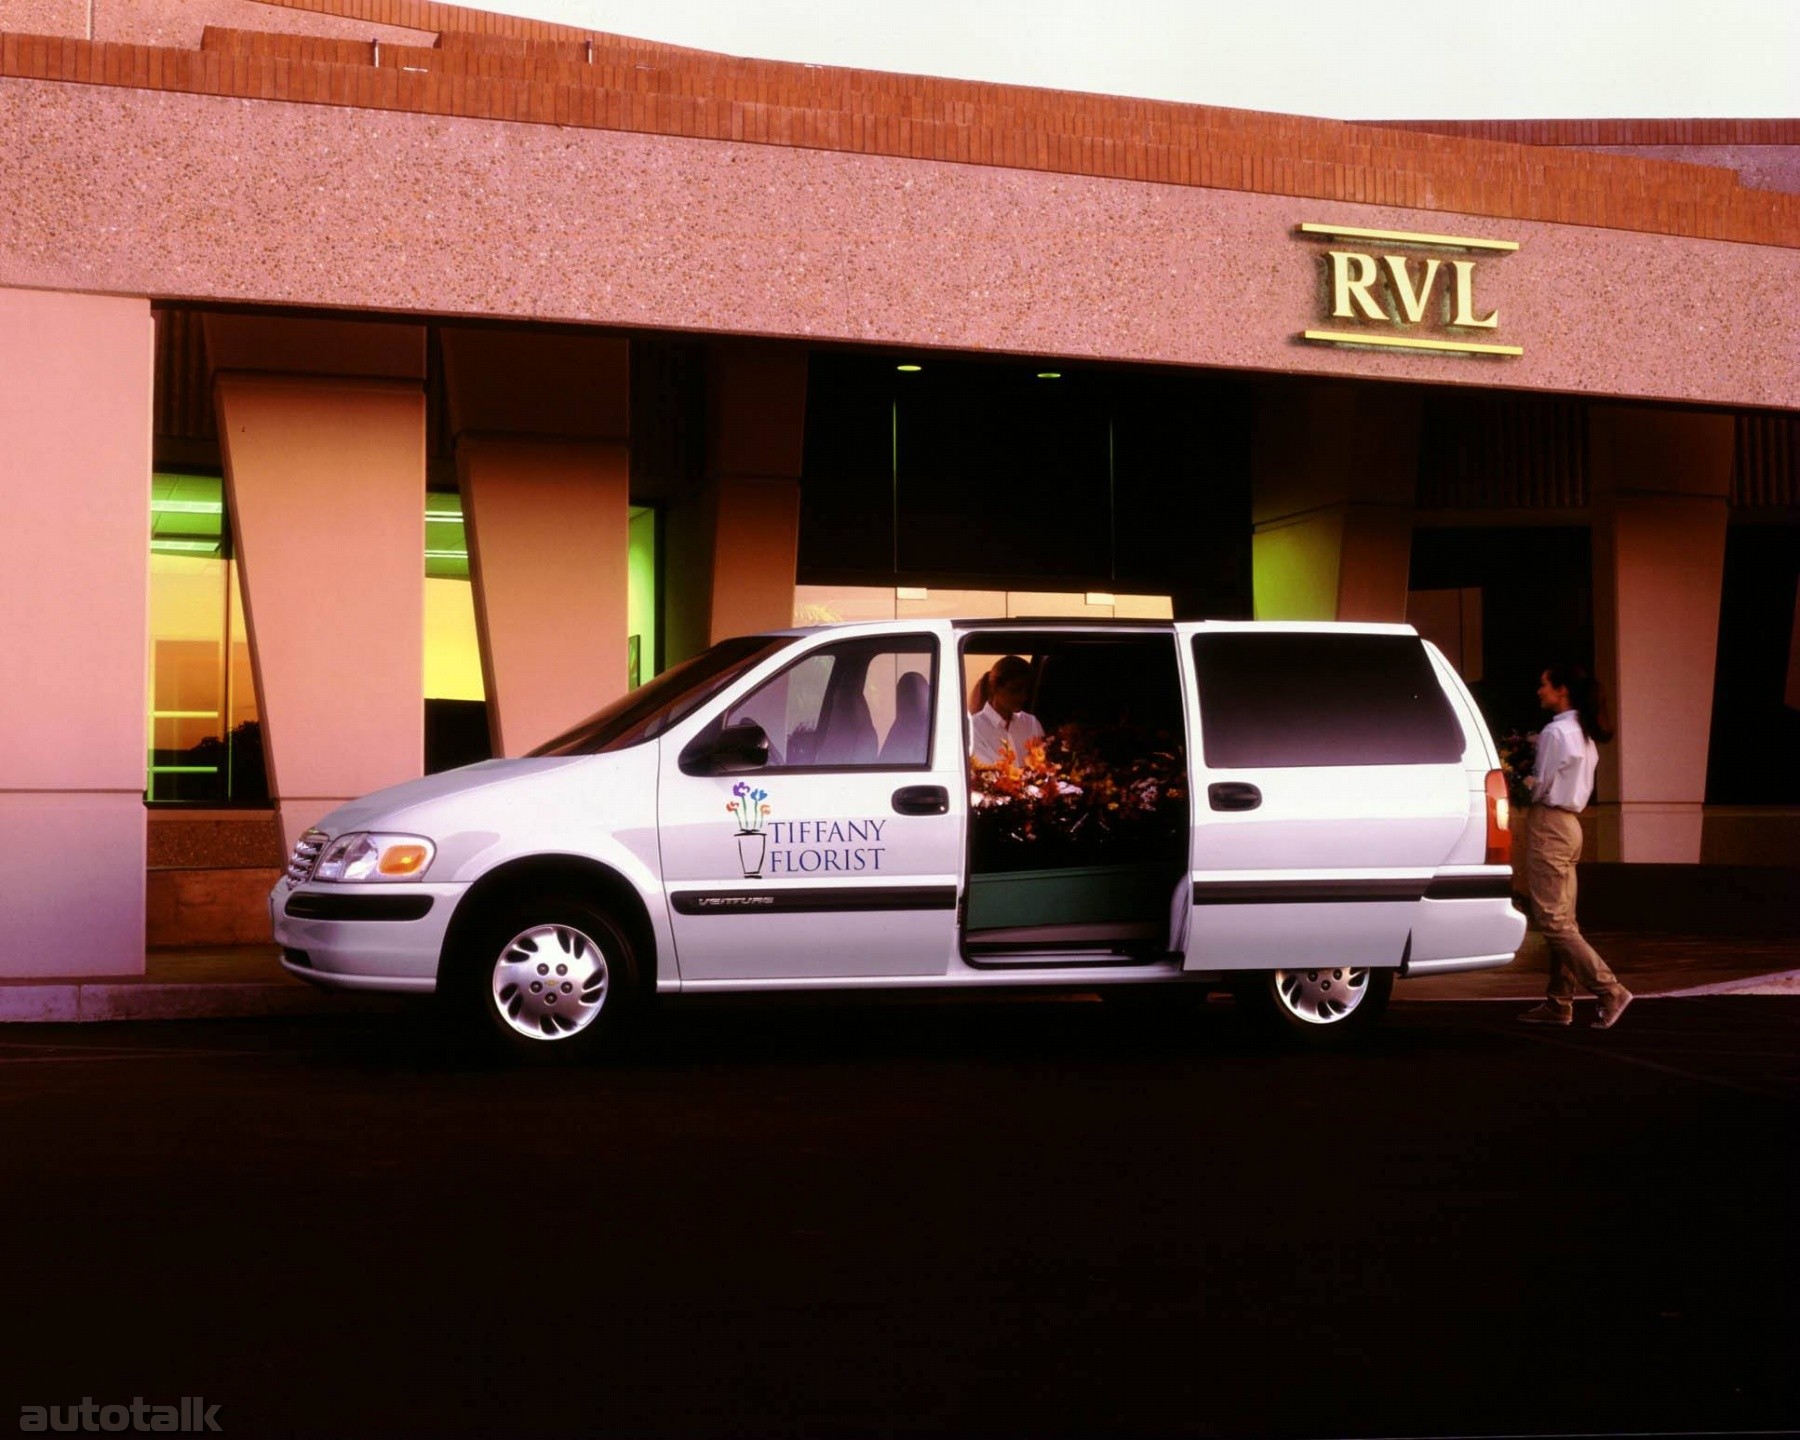 1999 Chevrolet Venture